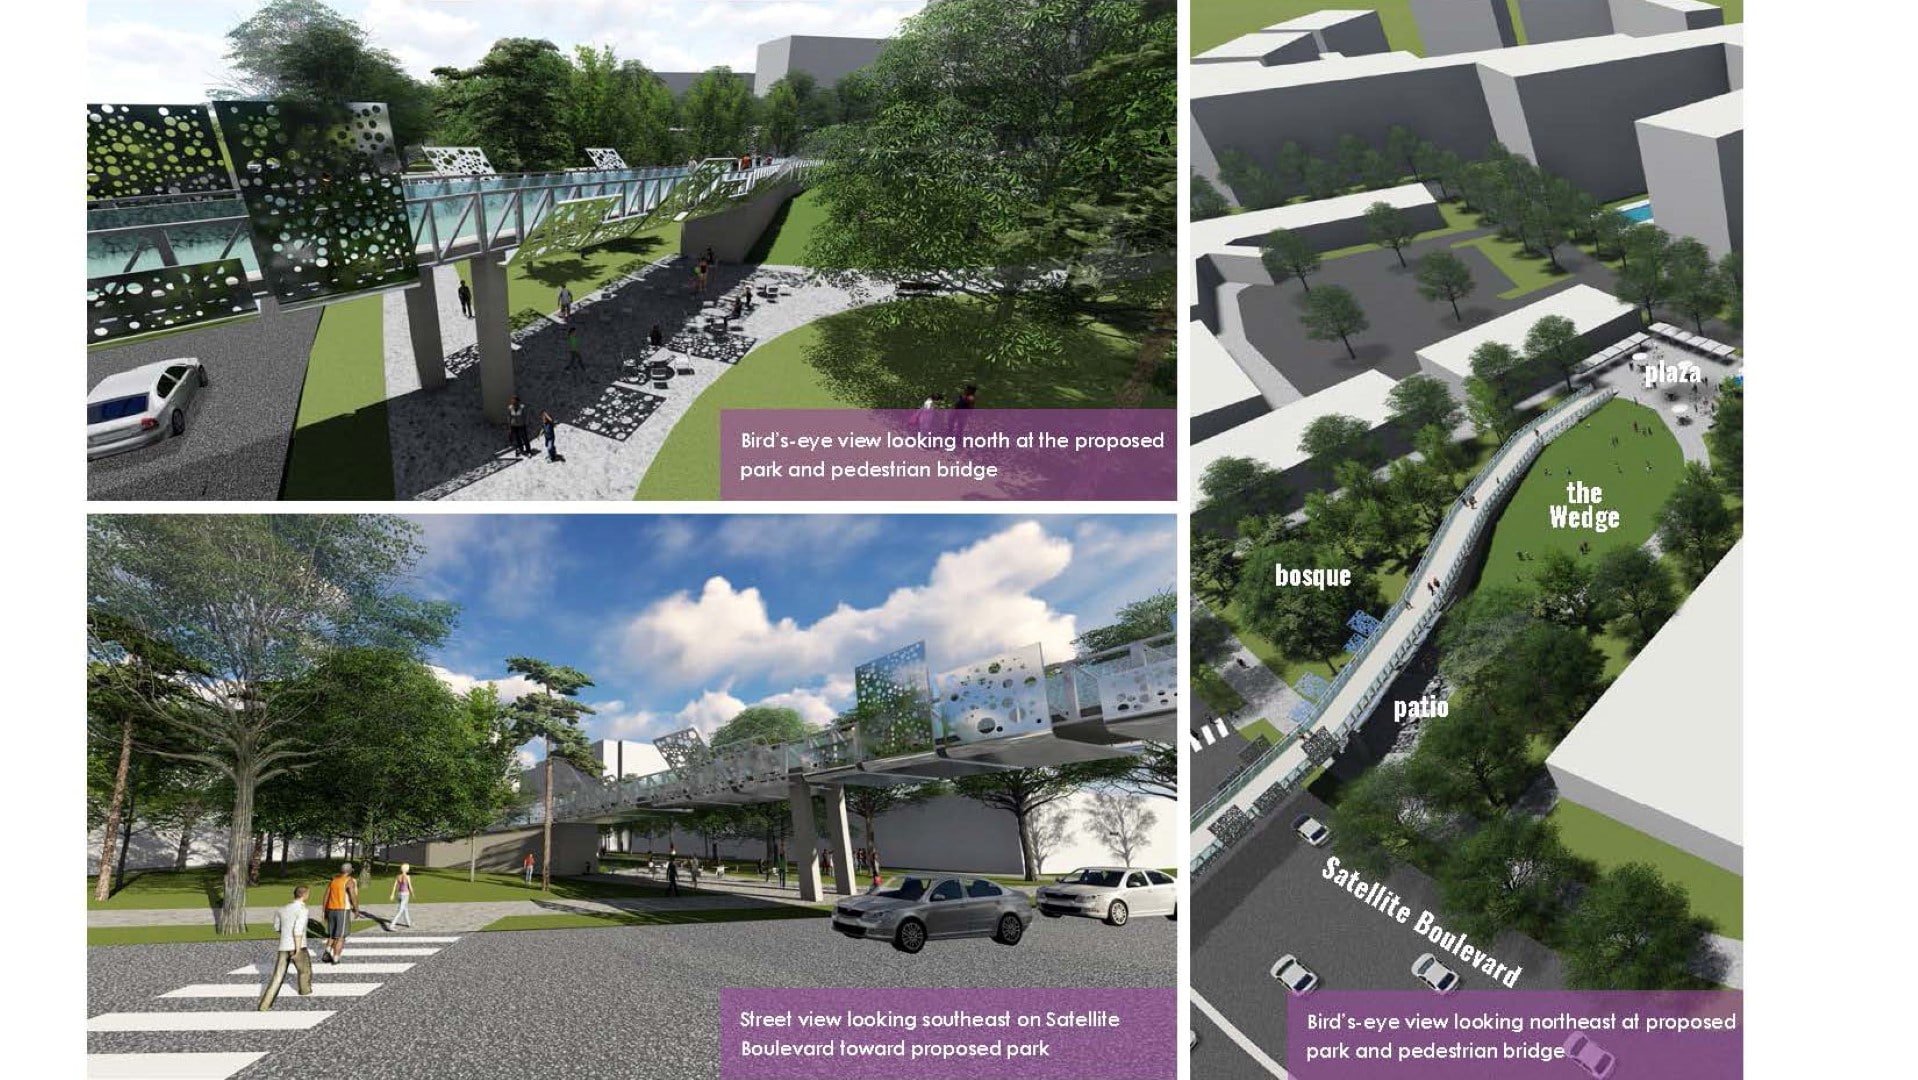 Gwinnett Connected- TSW Planning Architecture Landscape Architecture, Atlanta